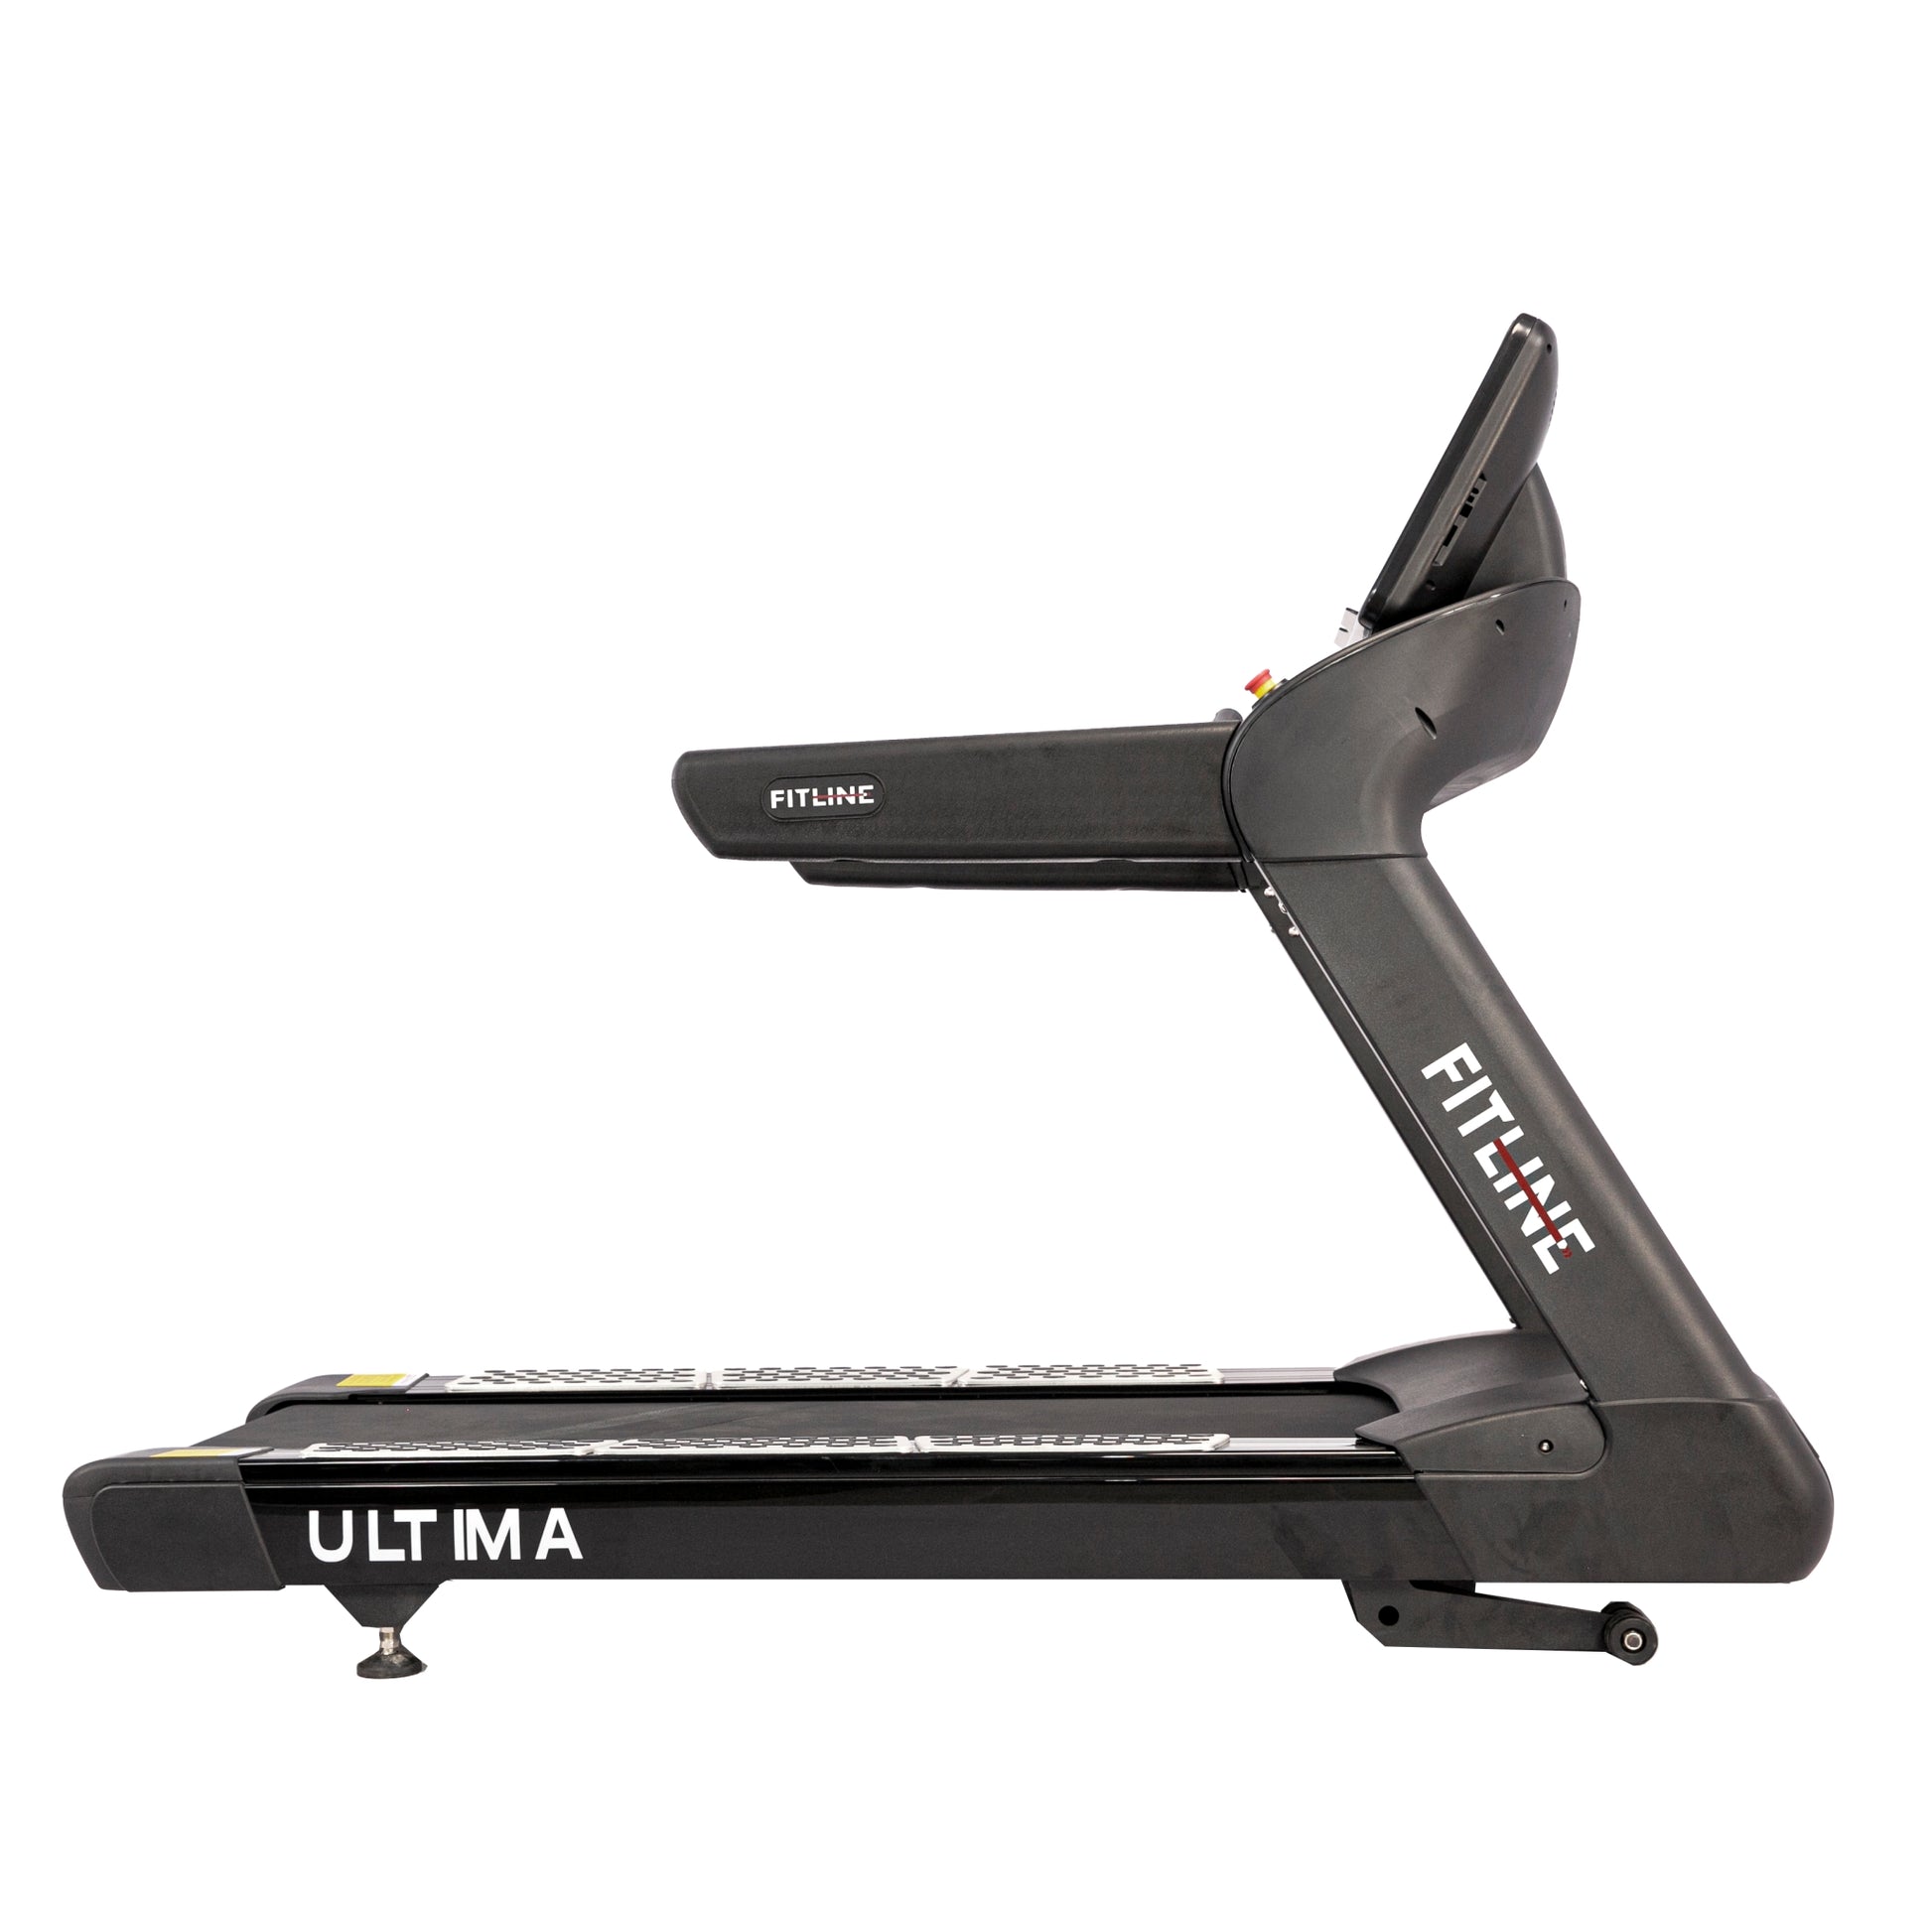 Ultima_Treadmill- Cardio Exercise Fitness Equipment